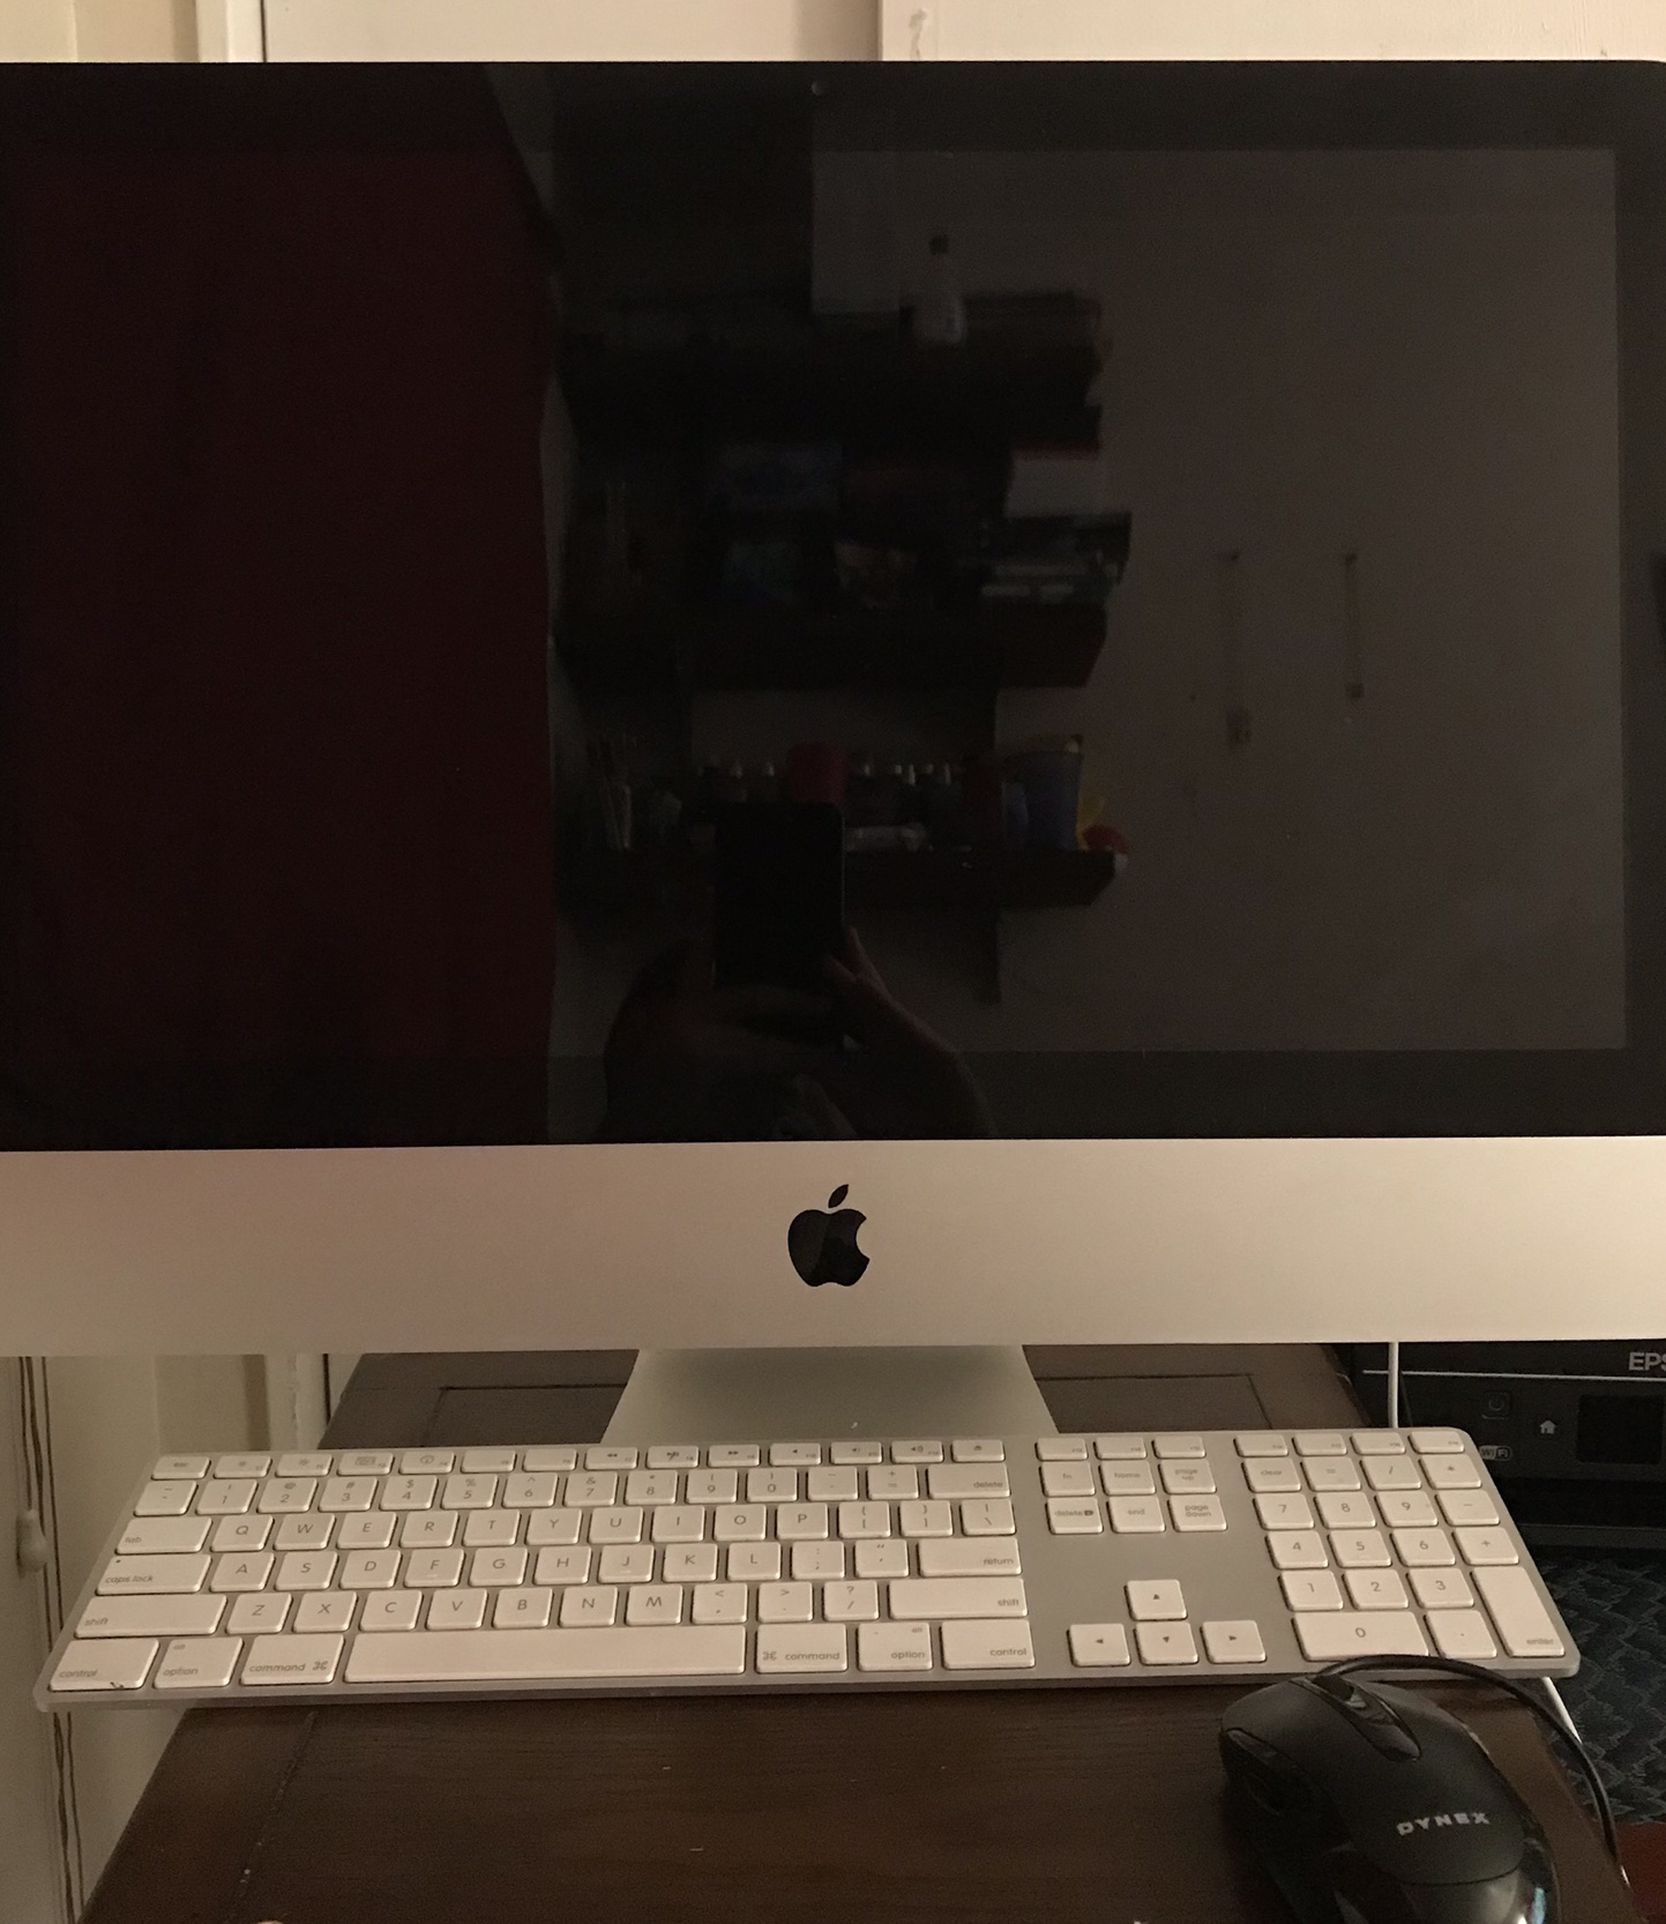 2009 21.5 Inch Apple Mac Computer